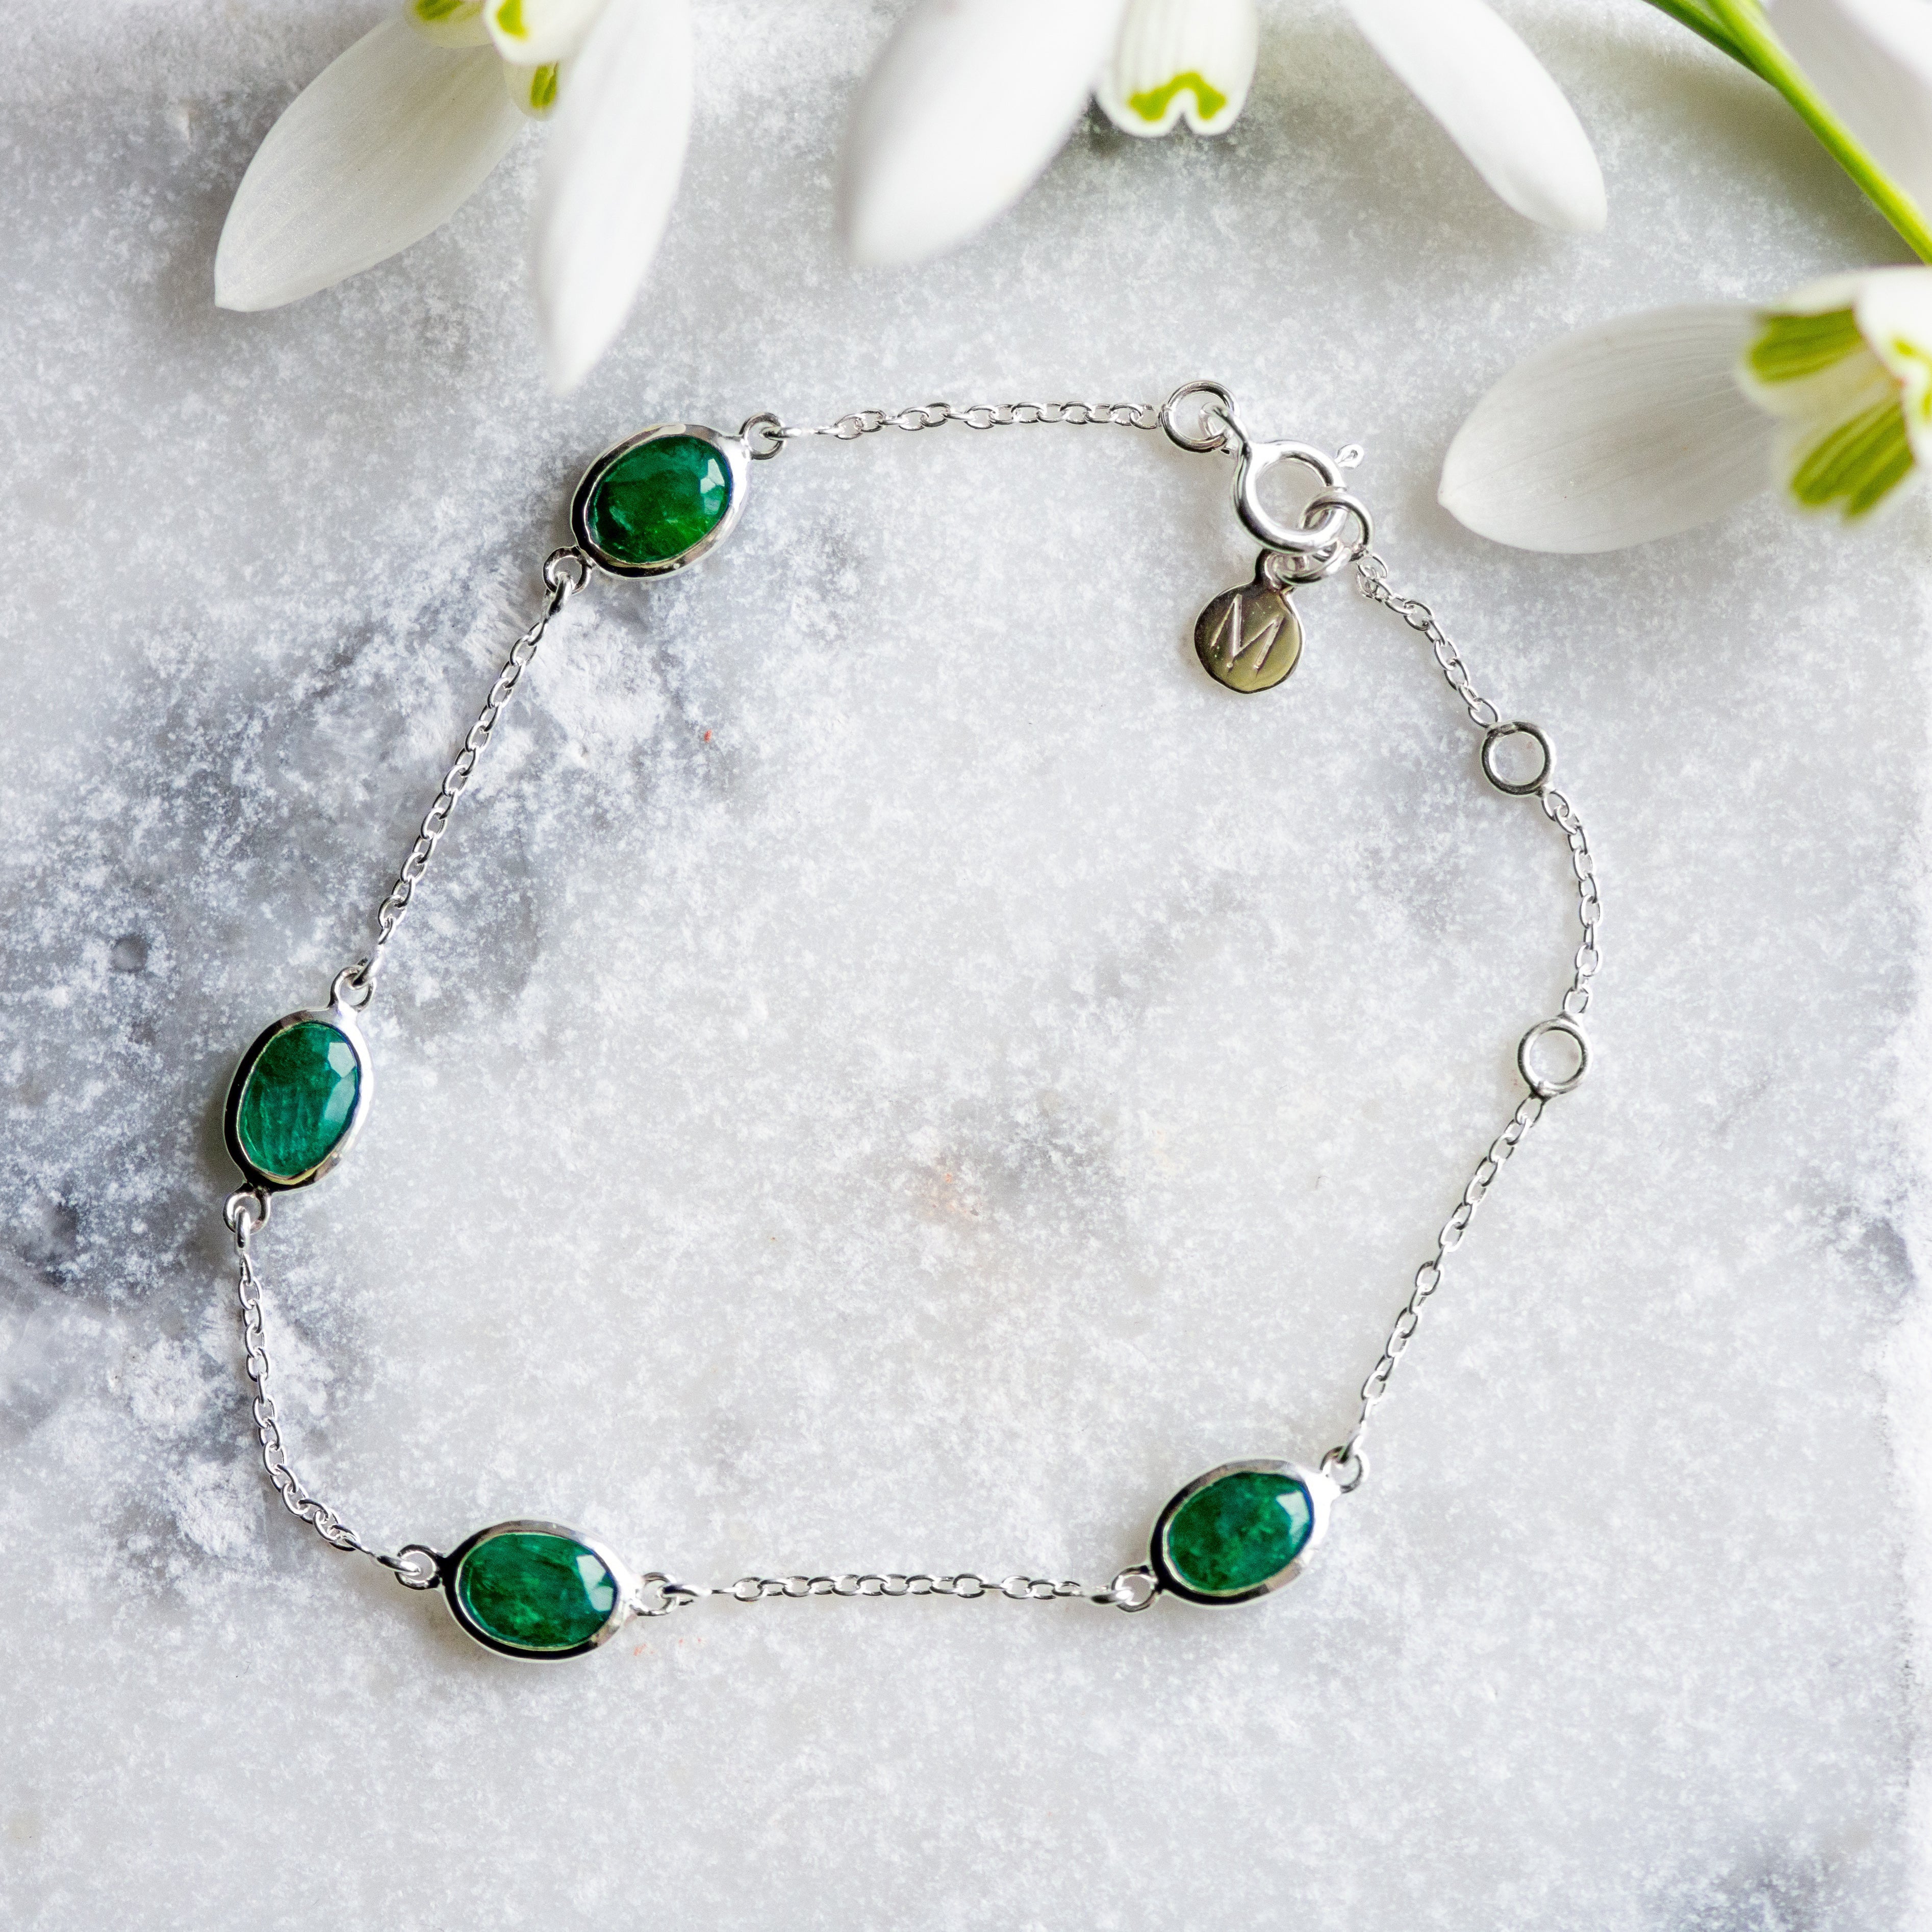 marilyn silver bracelet with emerald quartz from memara